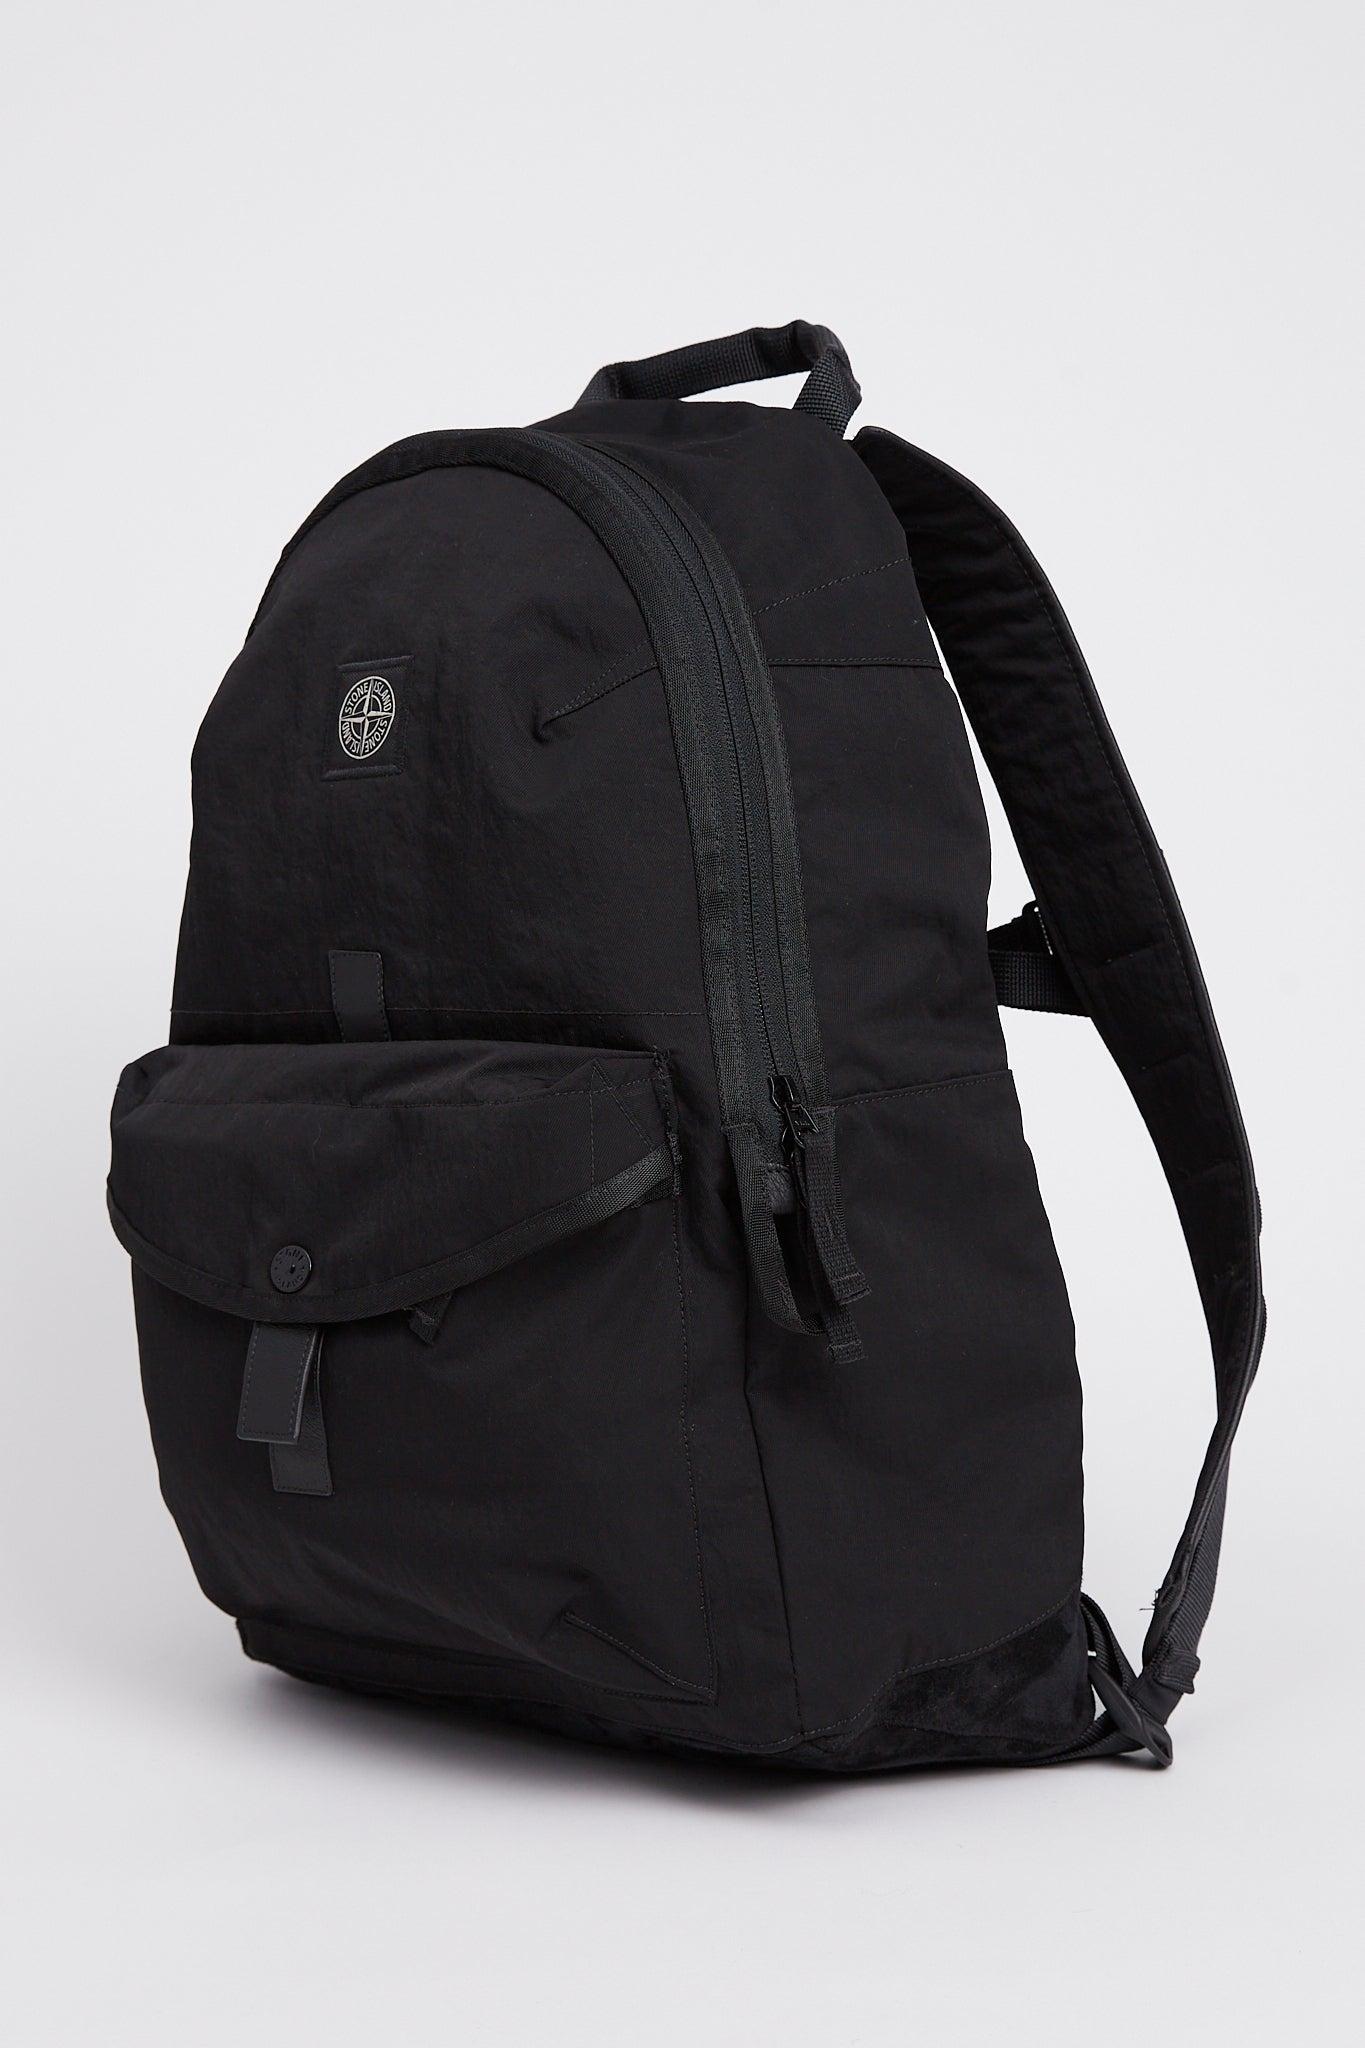 91174 Nylon Twill Backpack